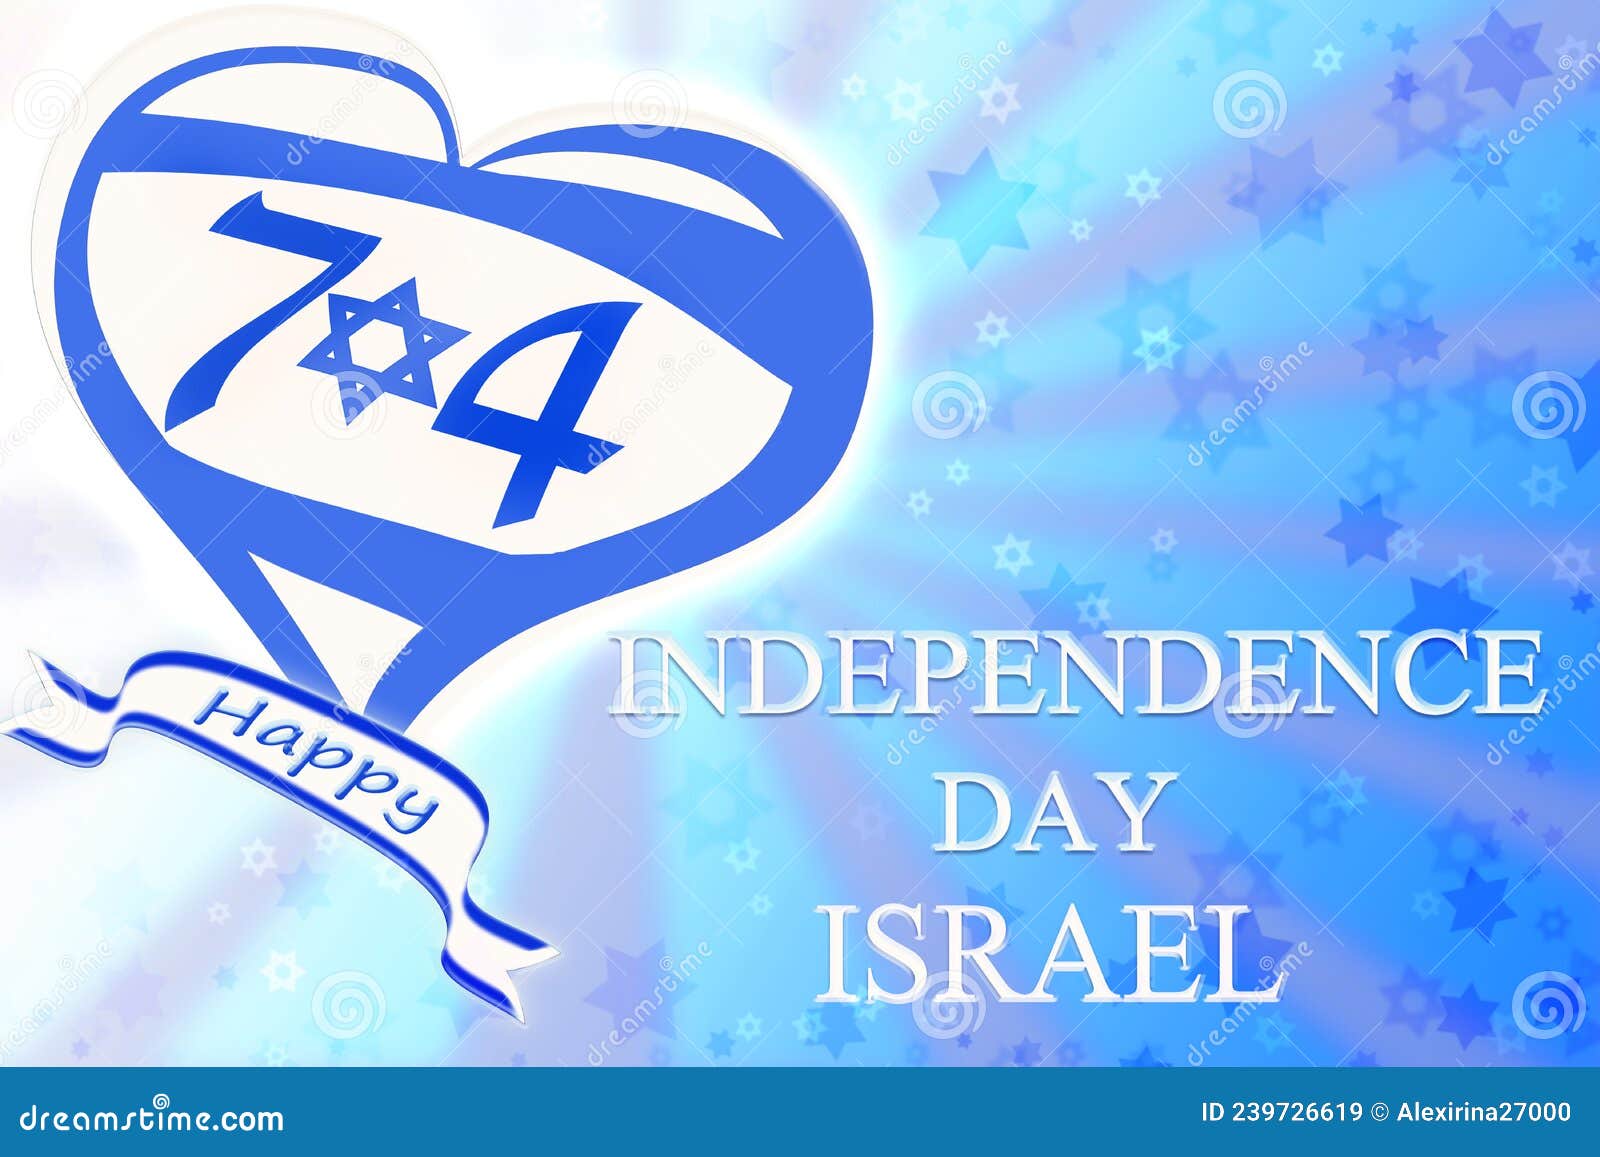 Israel Independence Day Celebration Stock Illustration ...